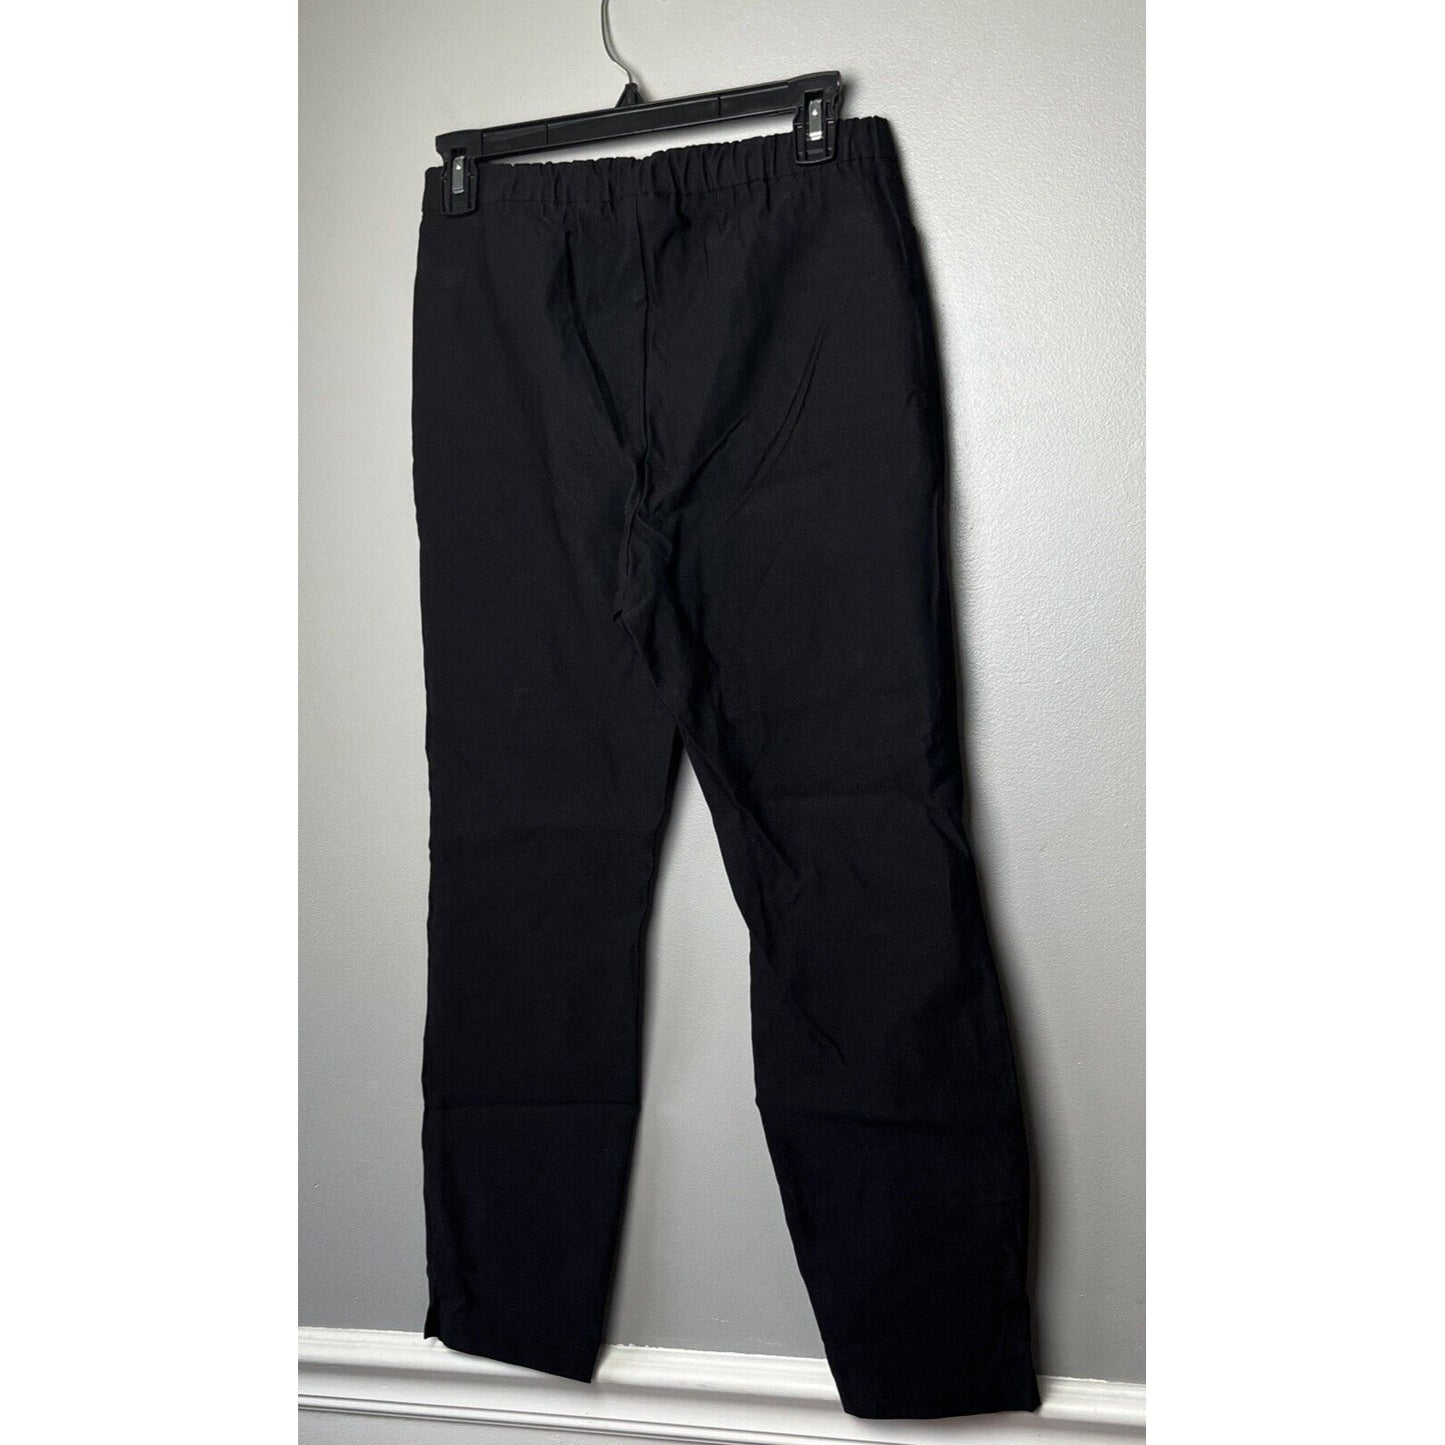 Susan Graver Smooth Stretch Slim Leg Ankle Pants (Black, Petite 8) A468699